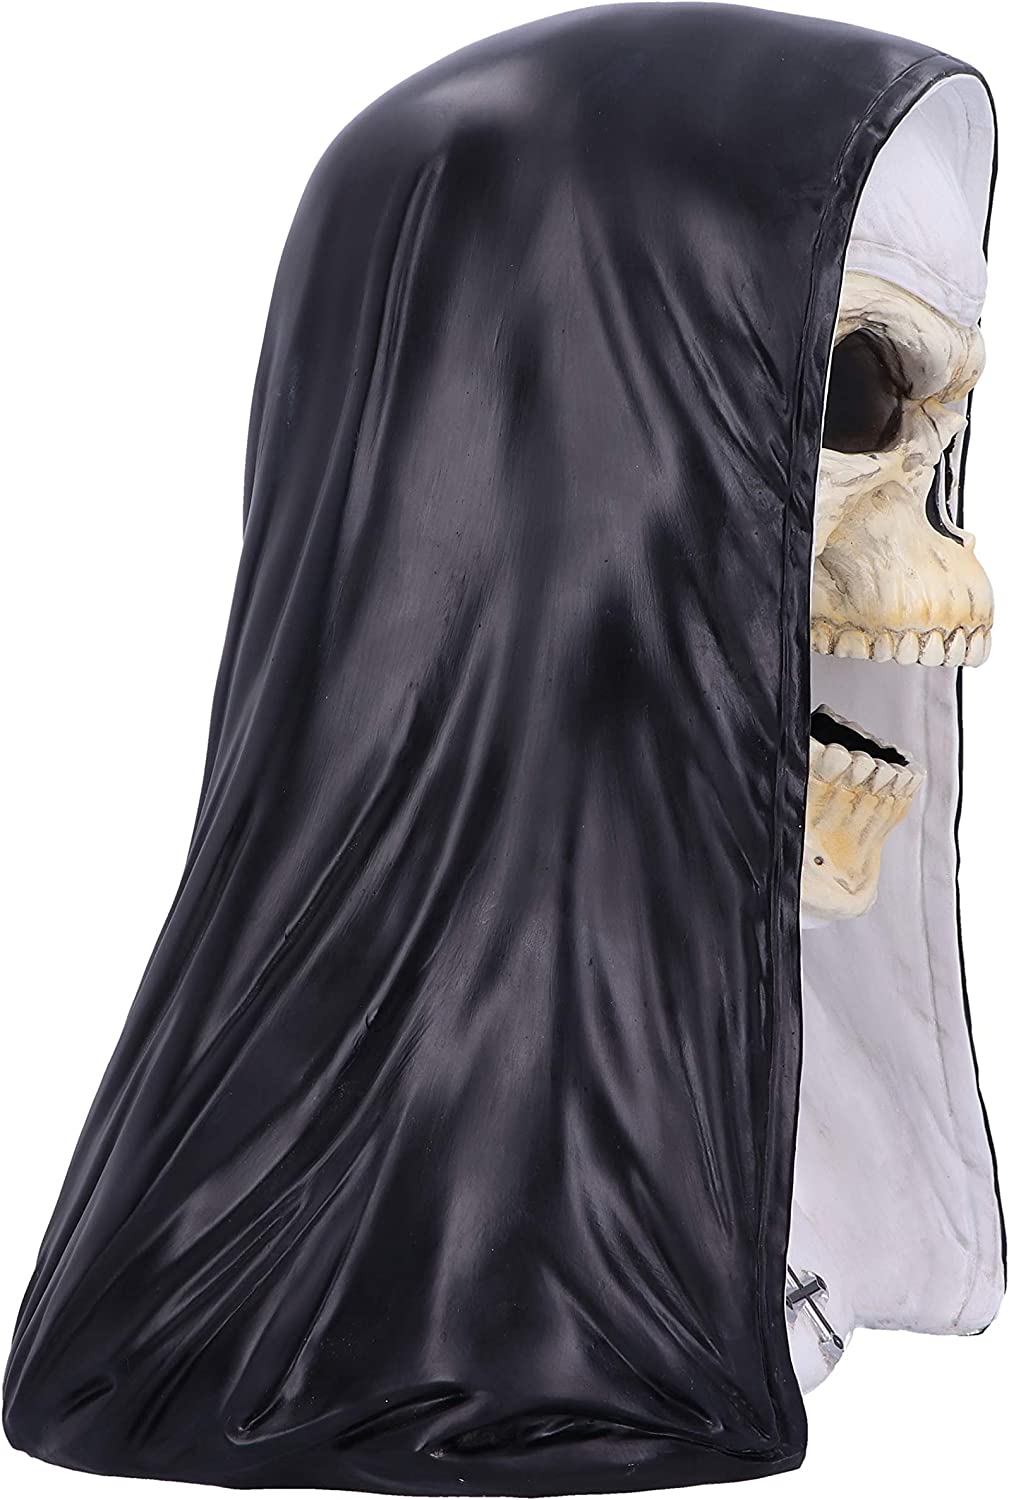 Nemesis Now James Ryman Sister Mortis 29cm Skeleton Nun Horror Bust Figurine, Bl